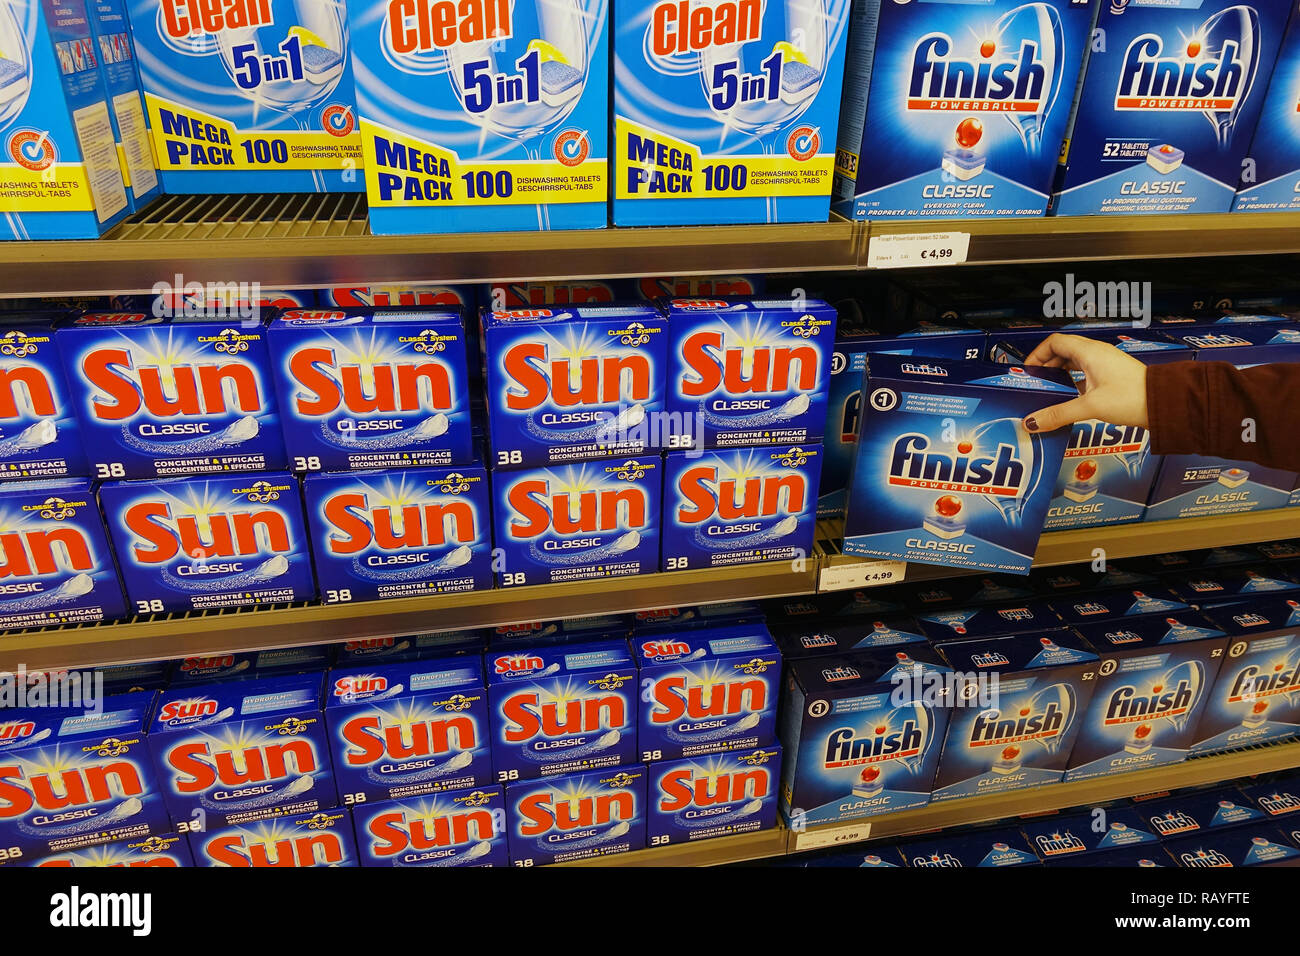 Dishwashing detergent Stock Photo